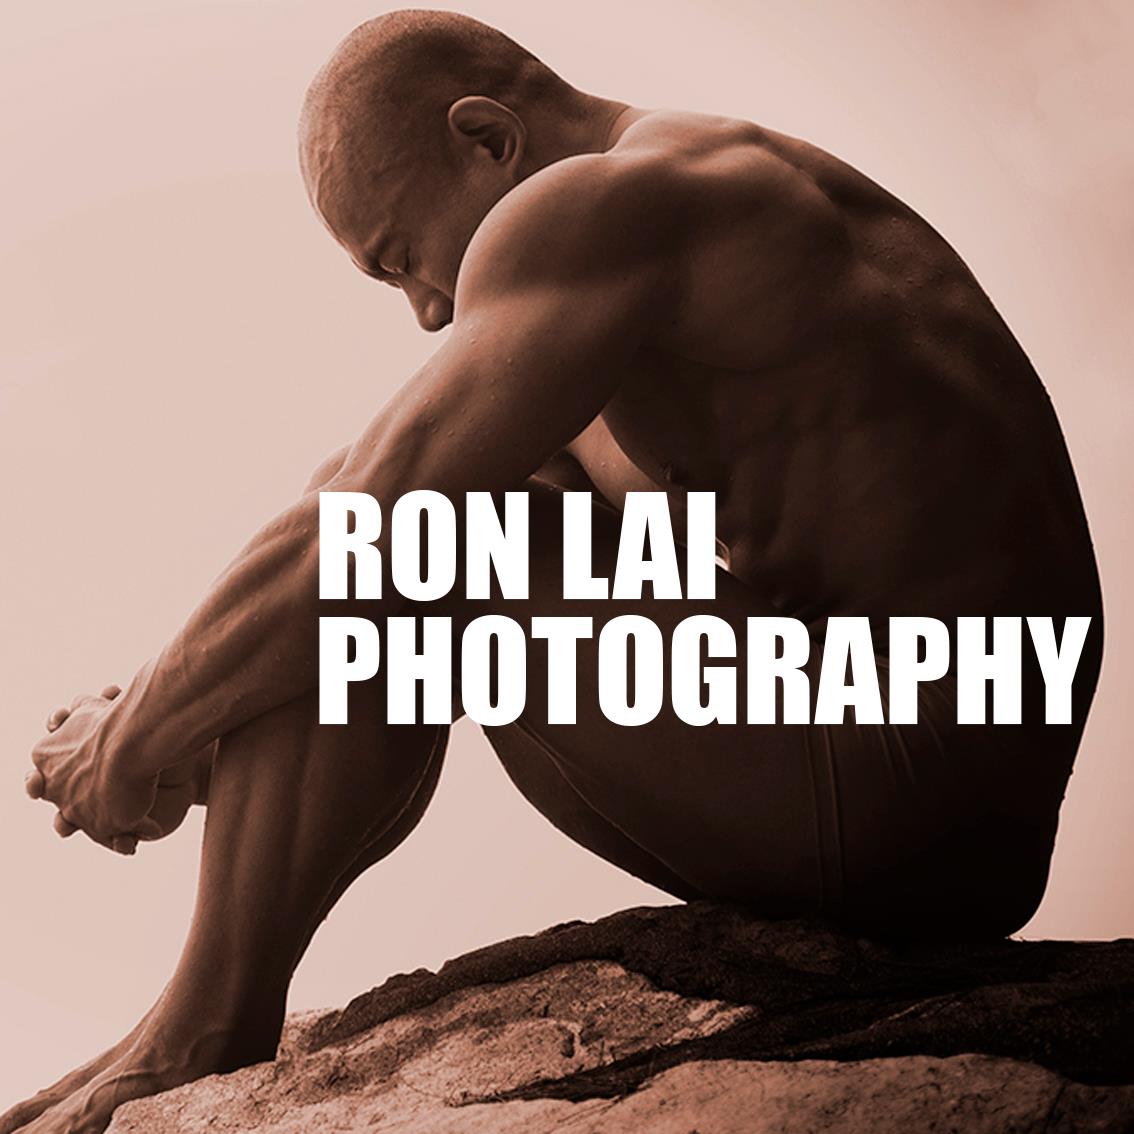 ron-lai-photography-140815-1.jpg